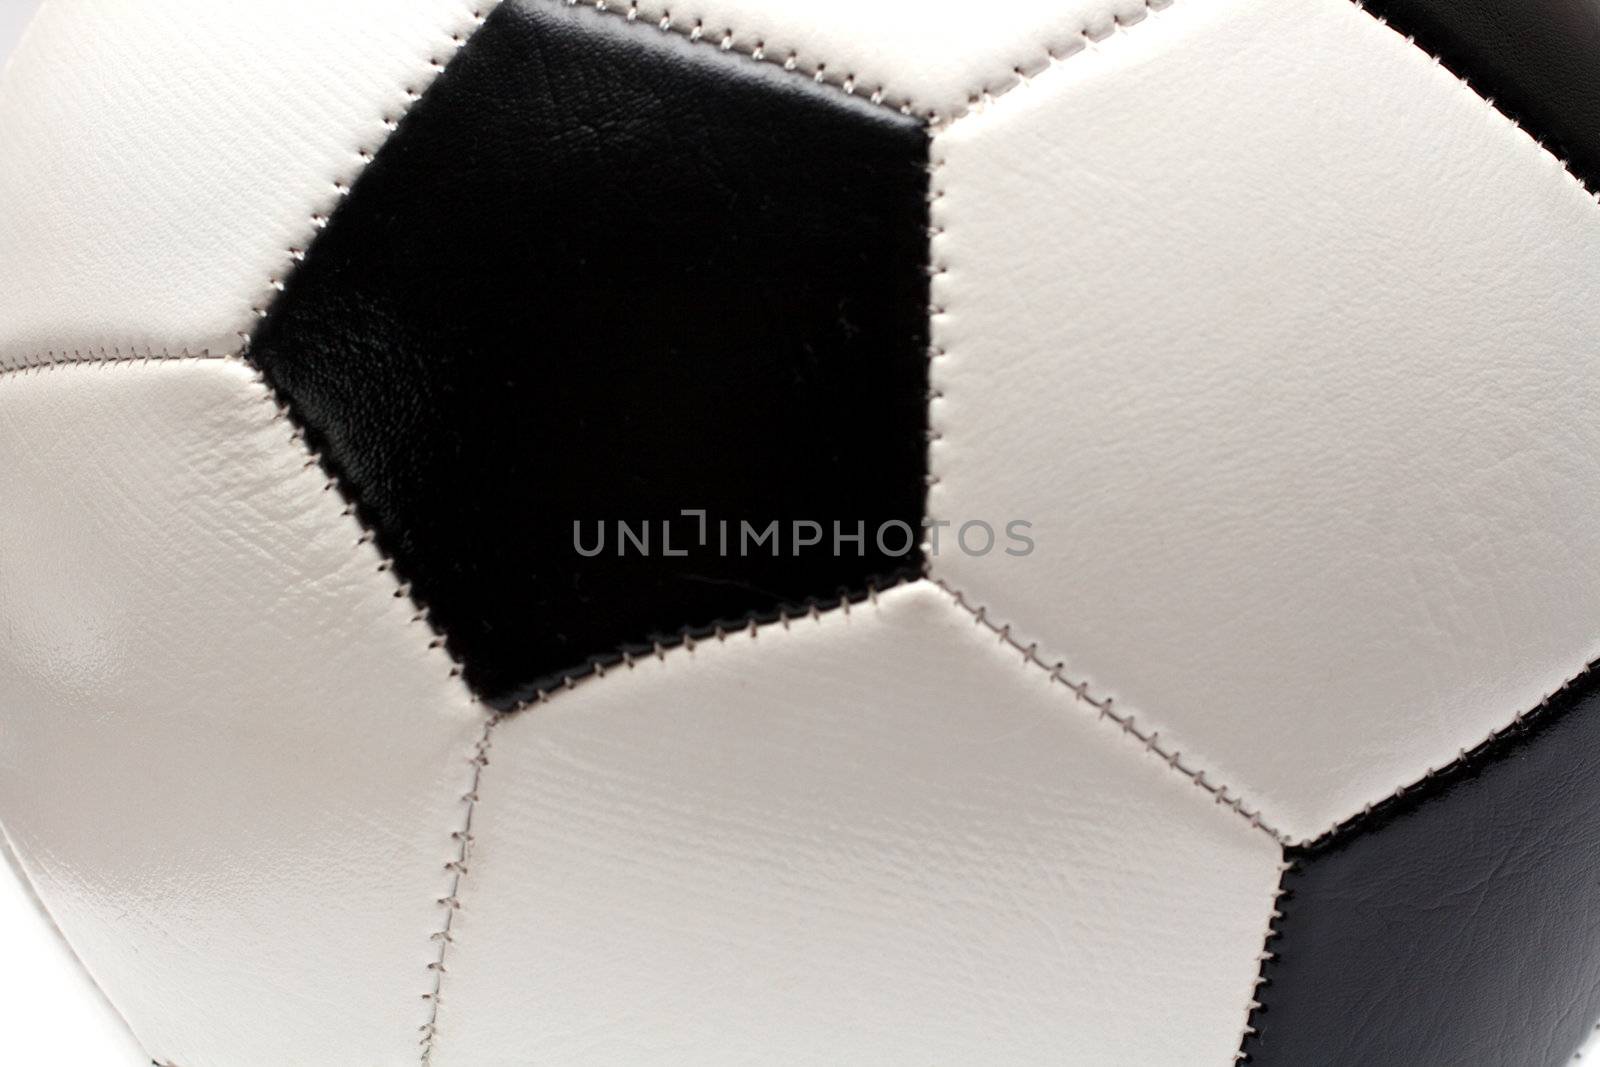 fragment of football soccer ball close-up